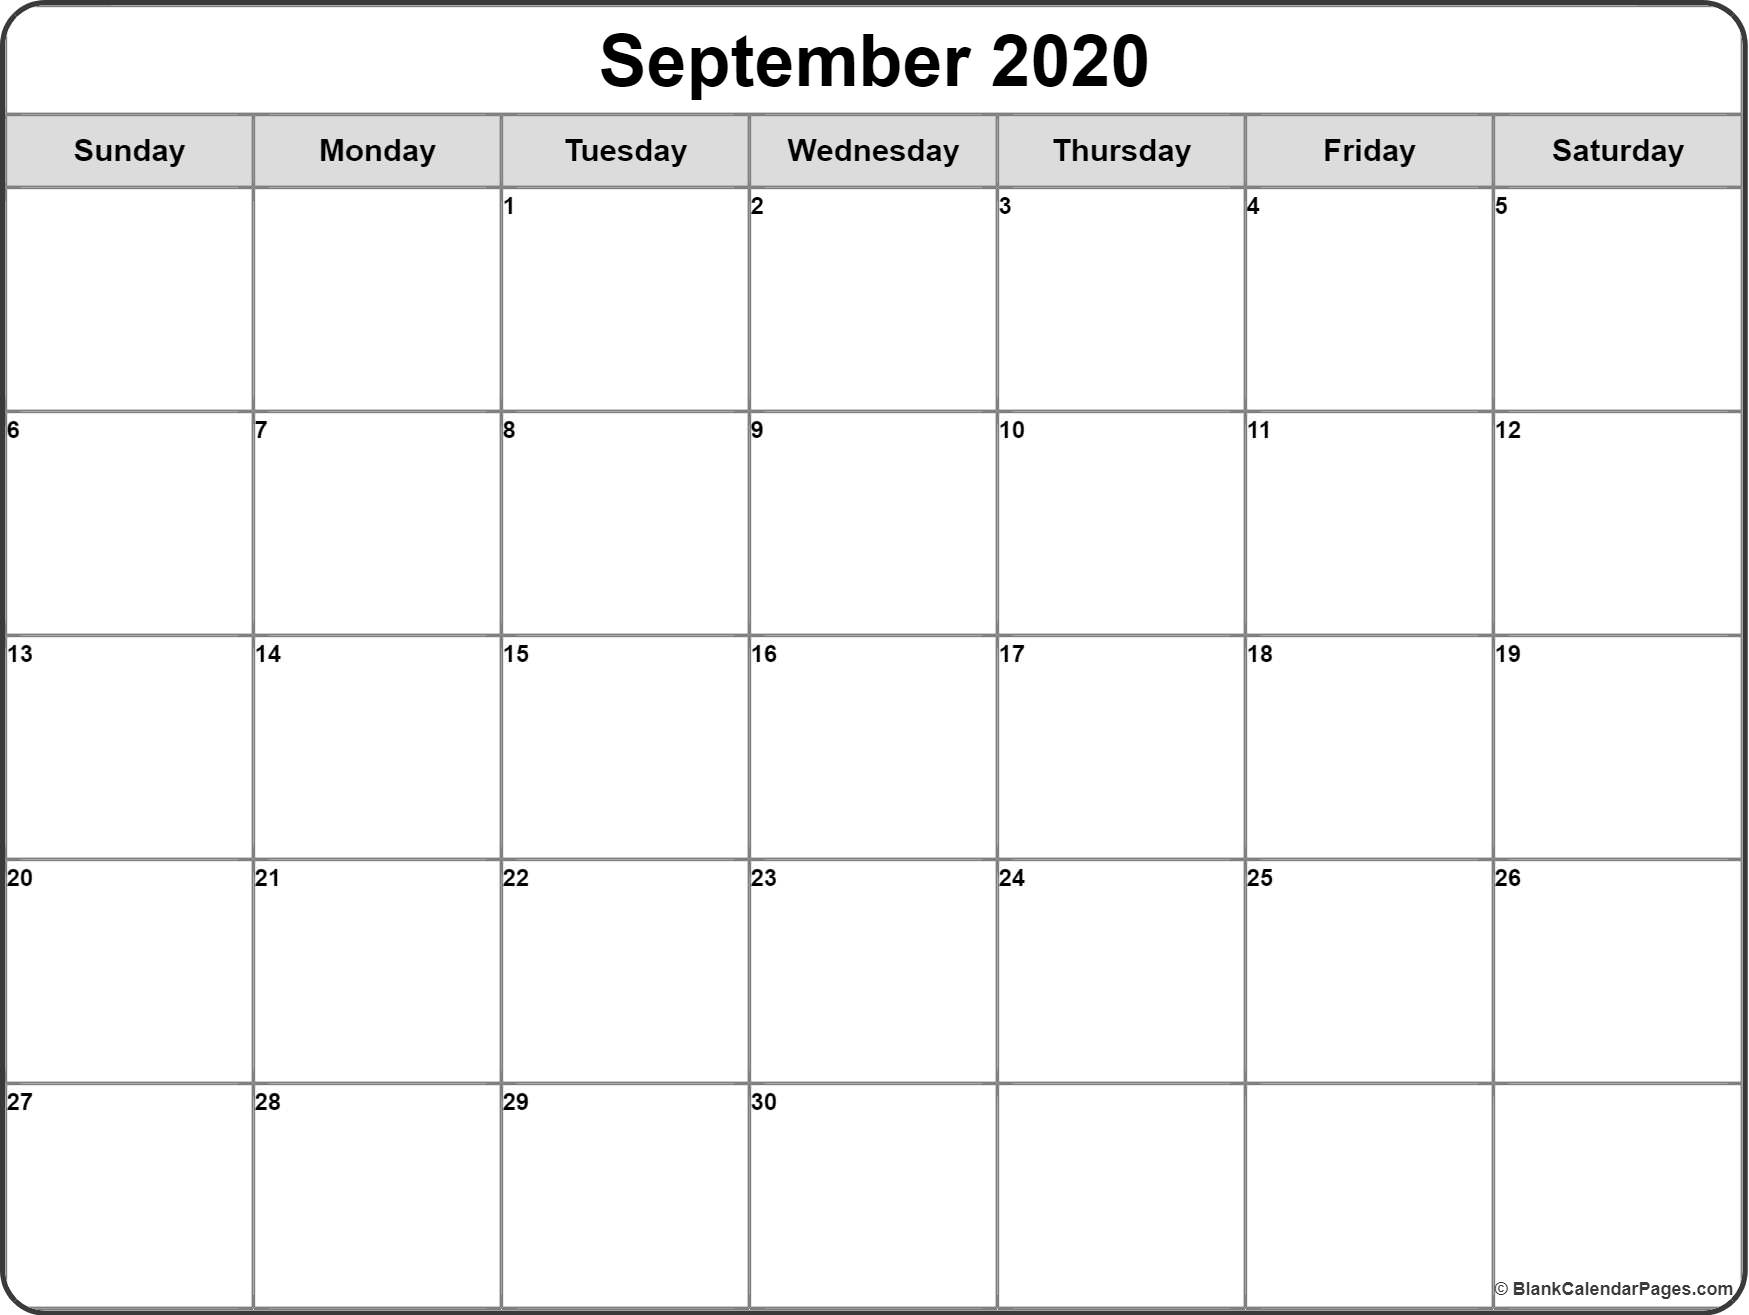 September 2020 Calendar | Free Printable Monthly Calendars inside Free Monthly Printable Calendar 2020